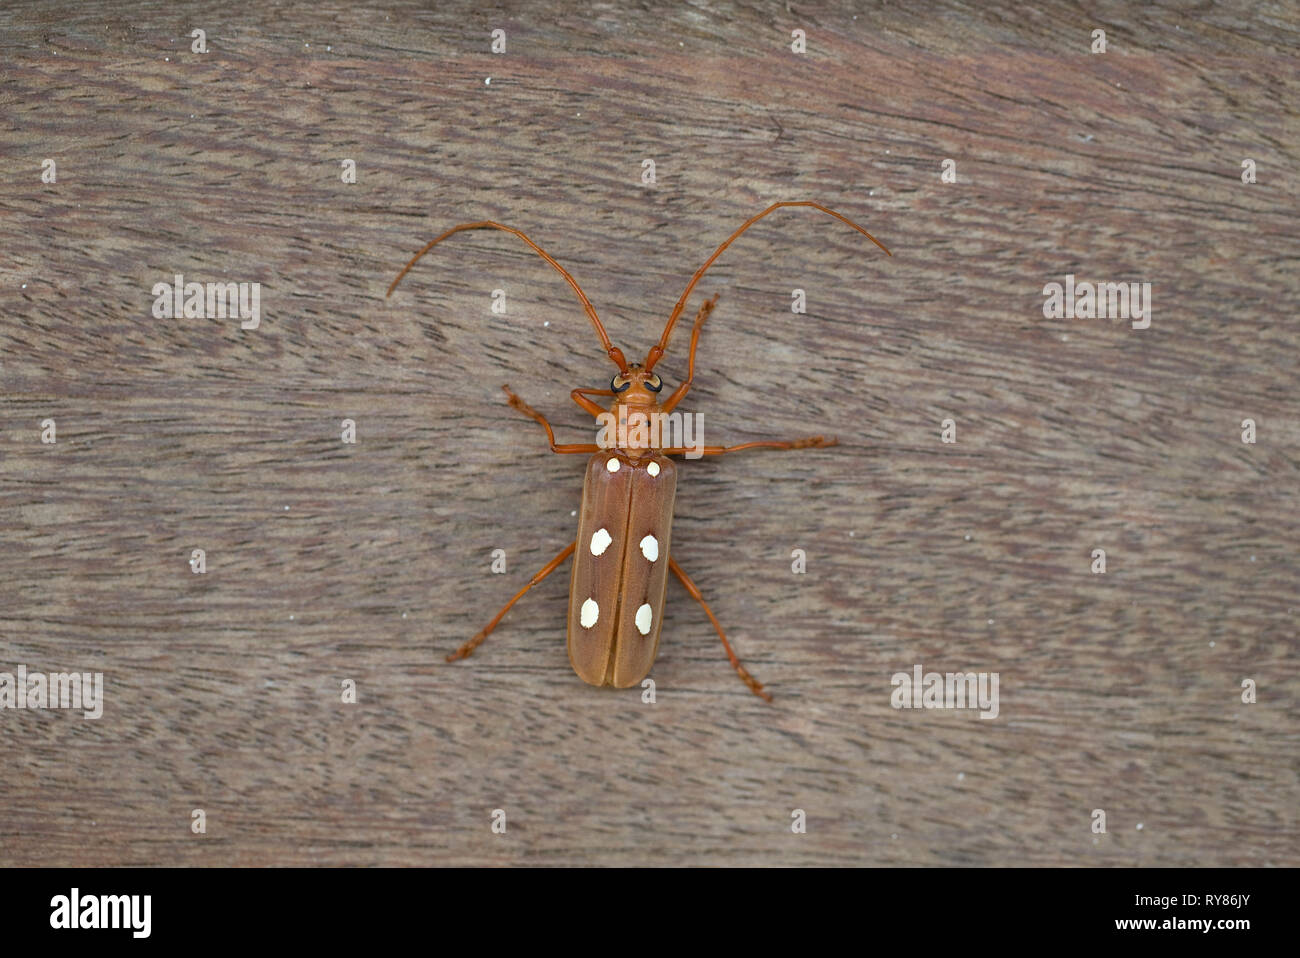 Longhorn Beetle species (Coccoderus amazonicus) Stock Photo